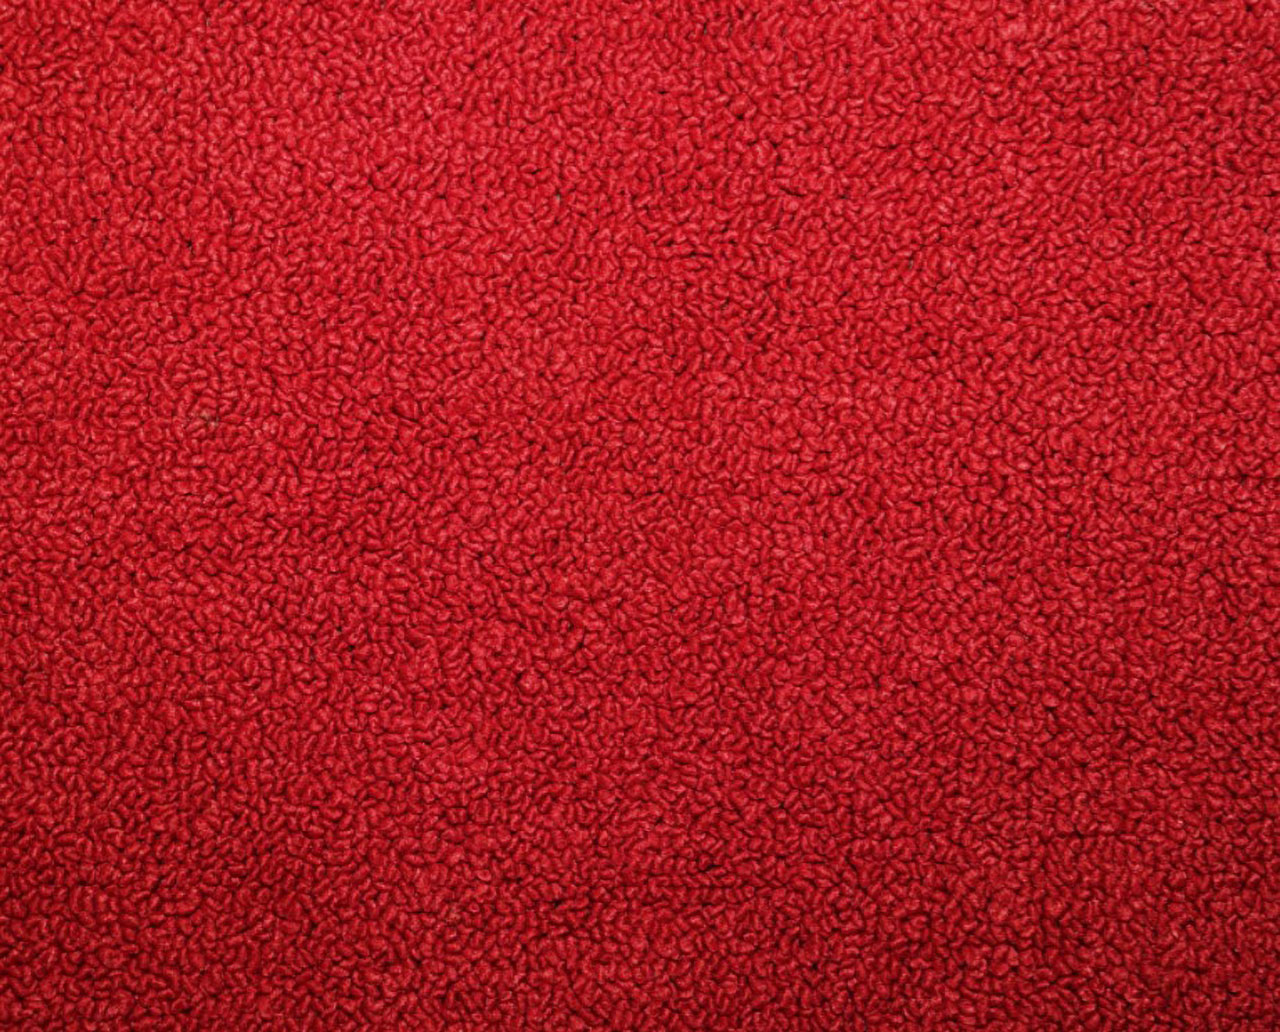 Holden Kingswood HK Kingswood Panel Van 12F Goya Red Carpet (Image 1 of 1)